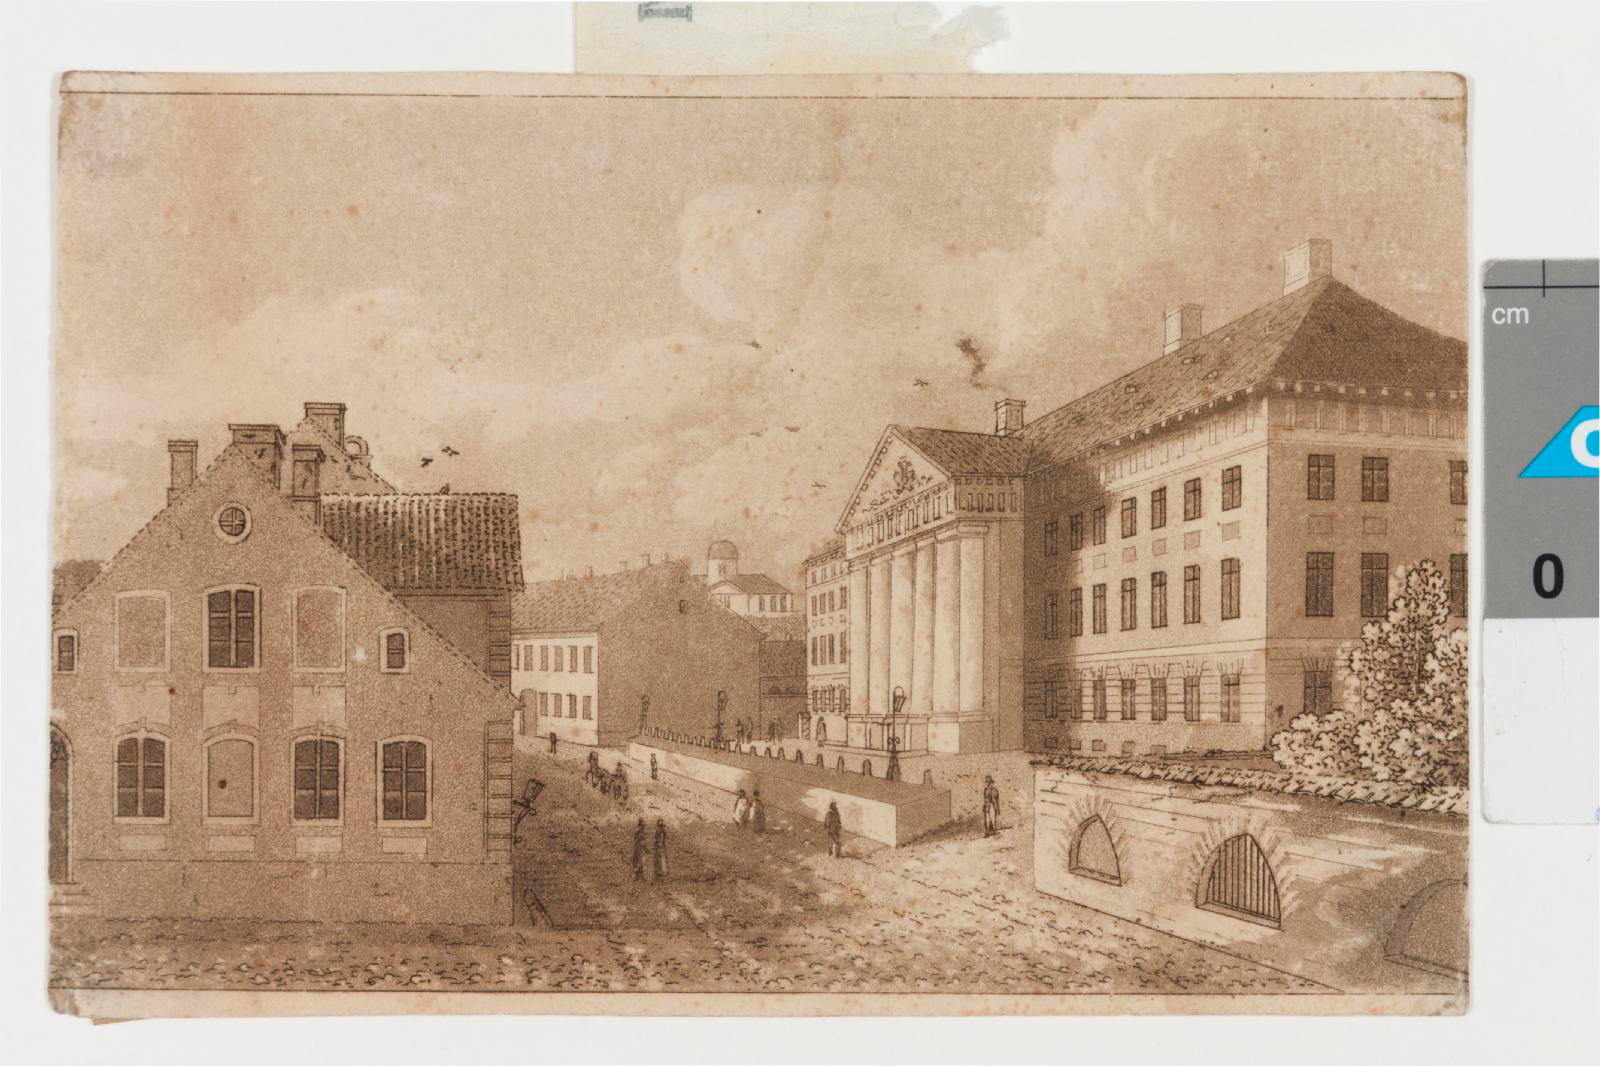 Clara, August. Building of the University of Tartu. 1821. Acquaintance and resort. Pl 7,1 x 11,4